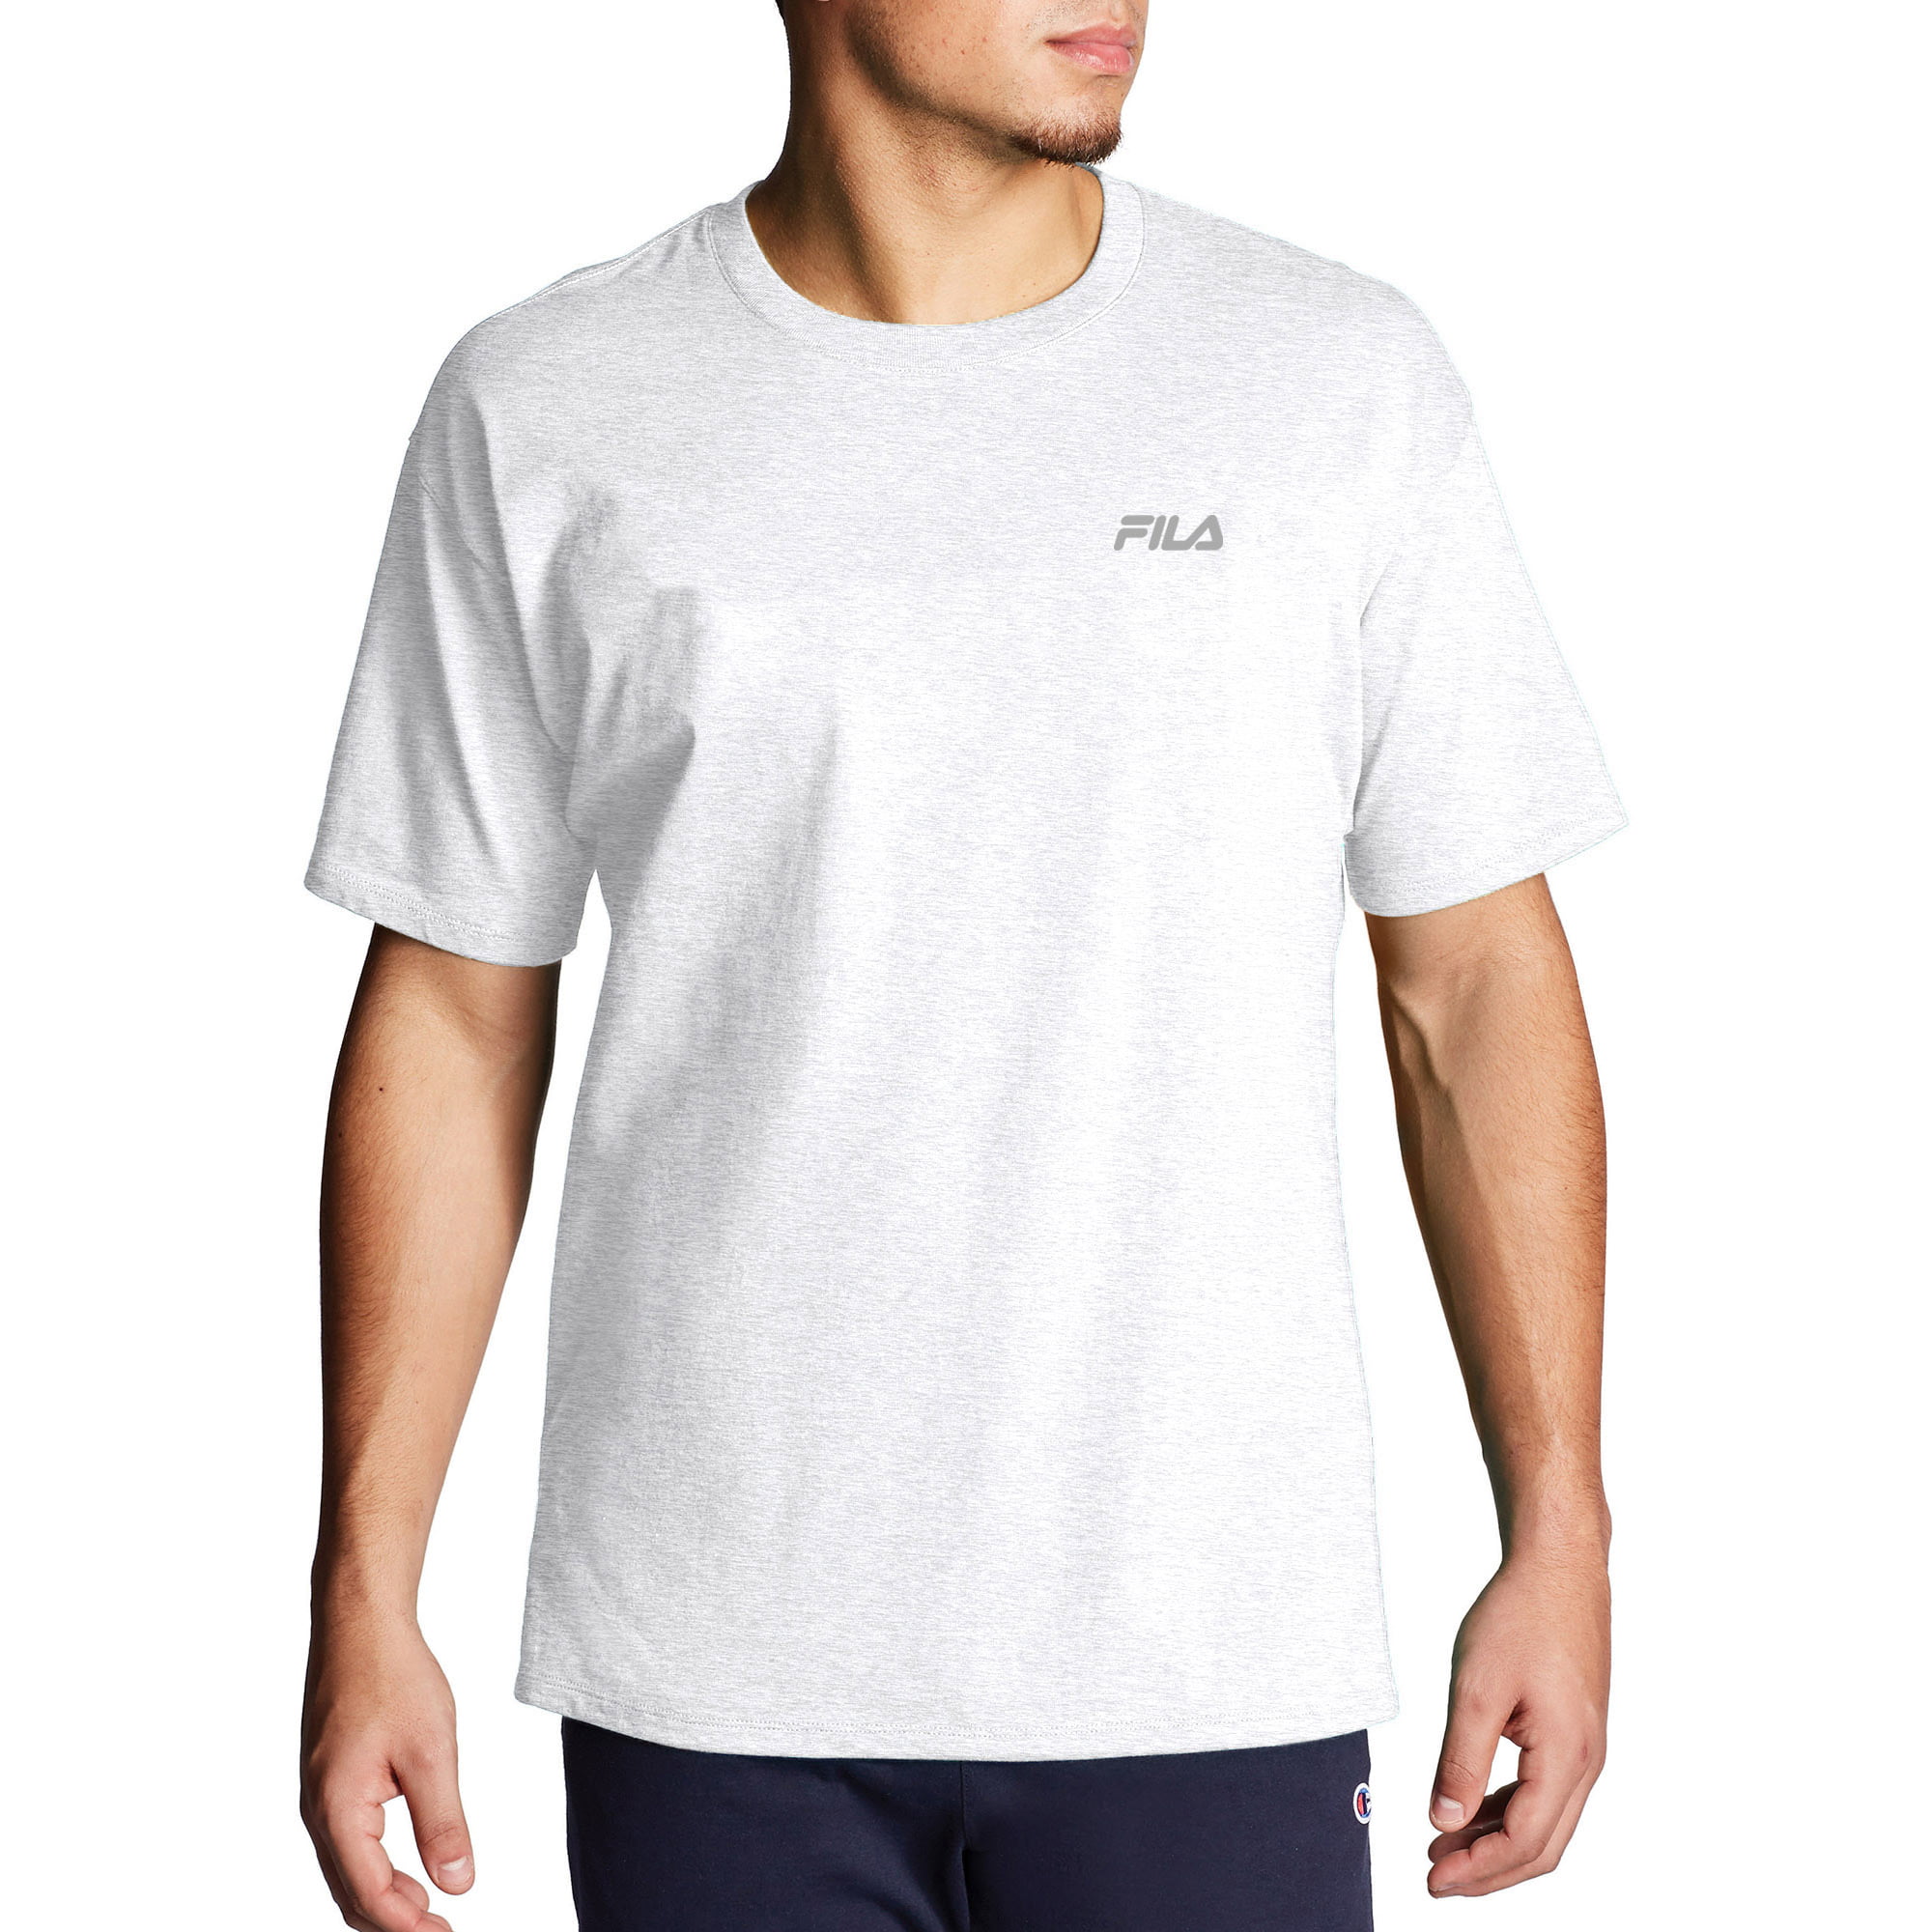 Kom forbi for at vide det Bliv såret At opdage Fila Men's Big & Tall Classic Chest Logo Performance T-Shirt, Sizes XLT-6XL  - Walmart.com